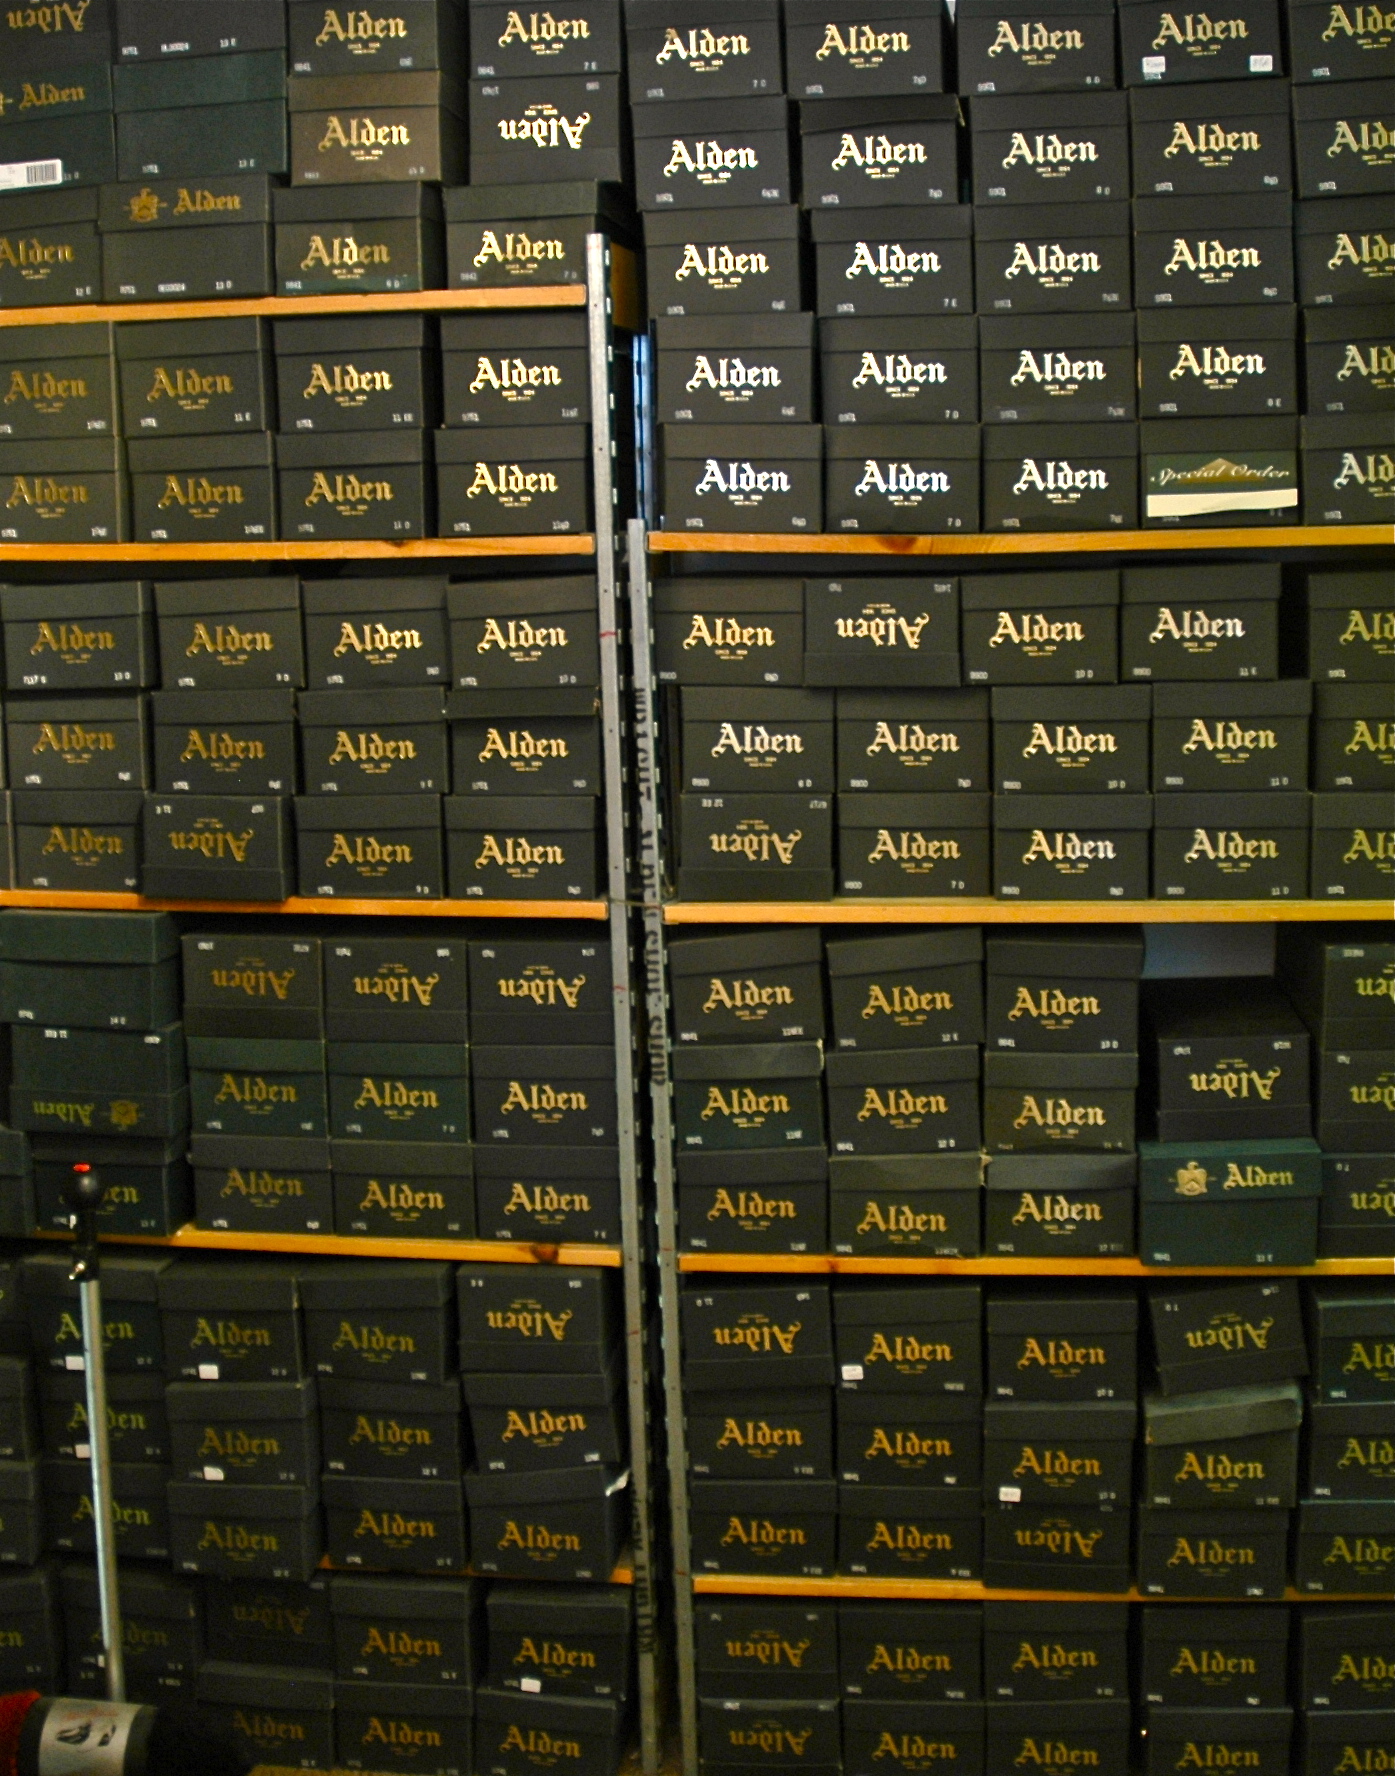 black Alden shoe boxes stacked